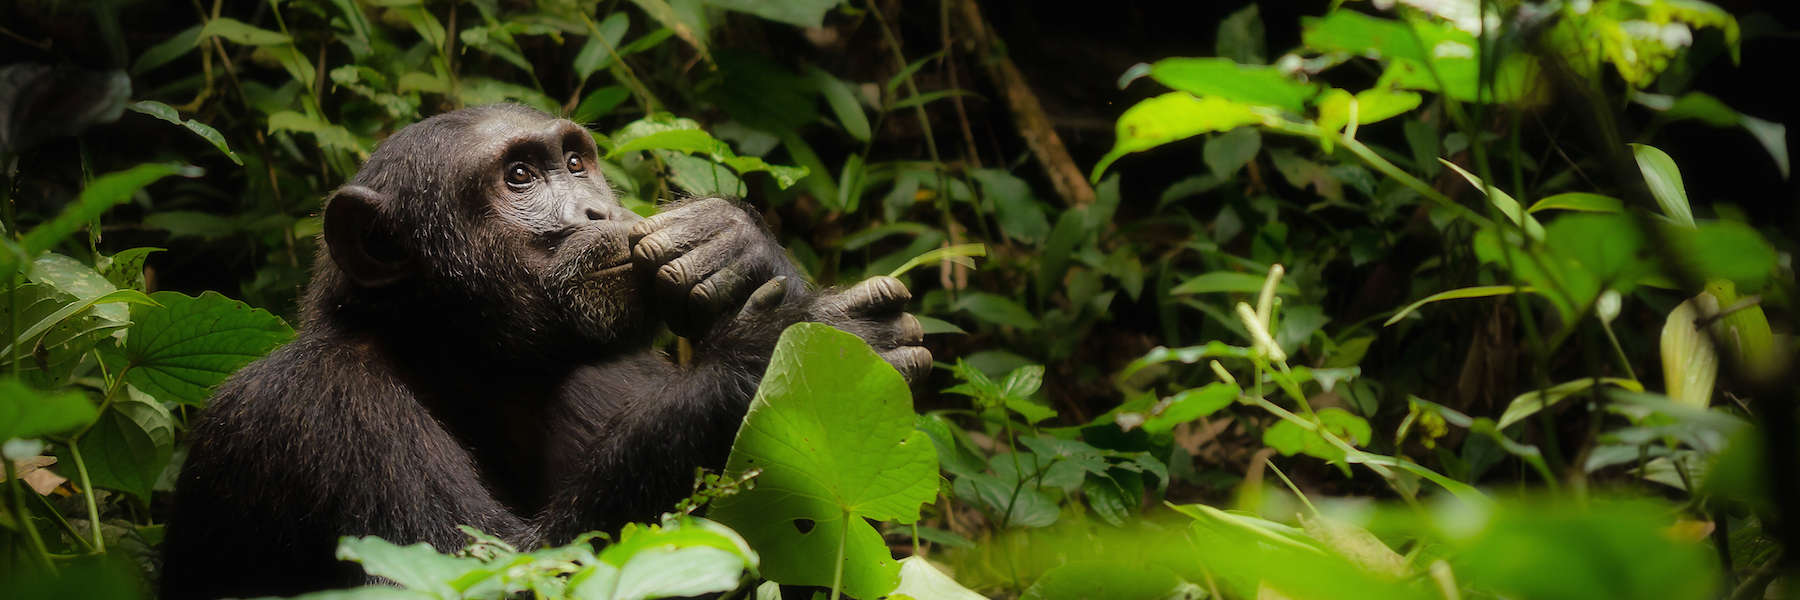 Uganda Wildlife Photography Highlights